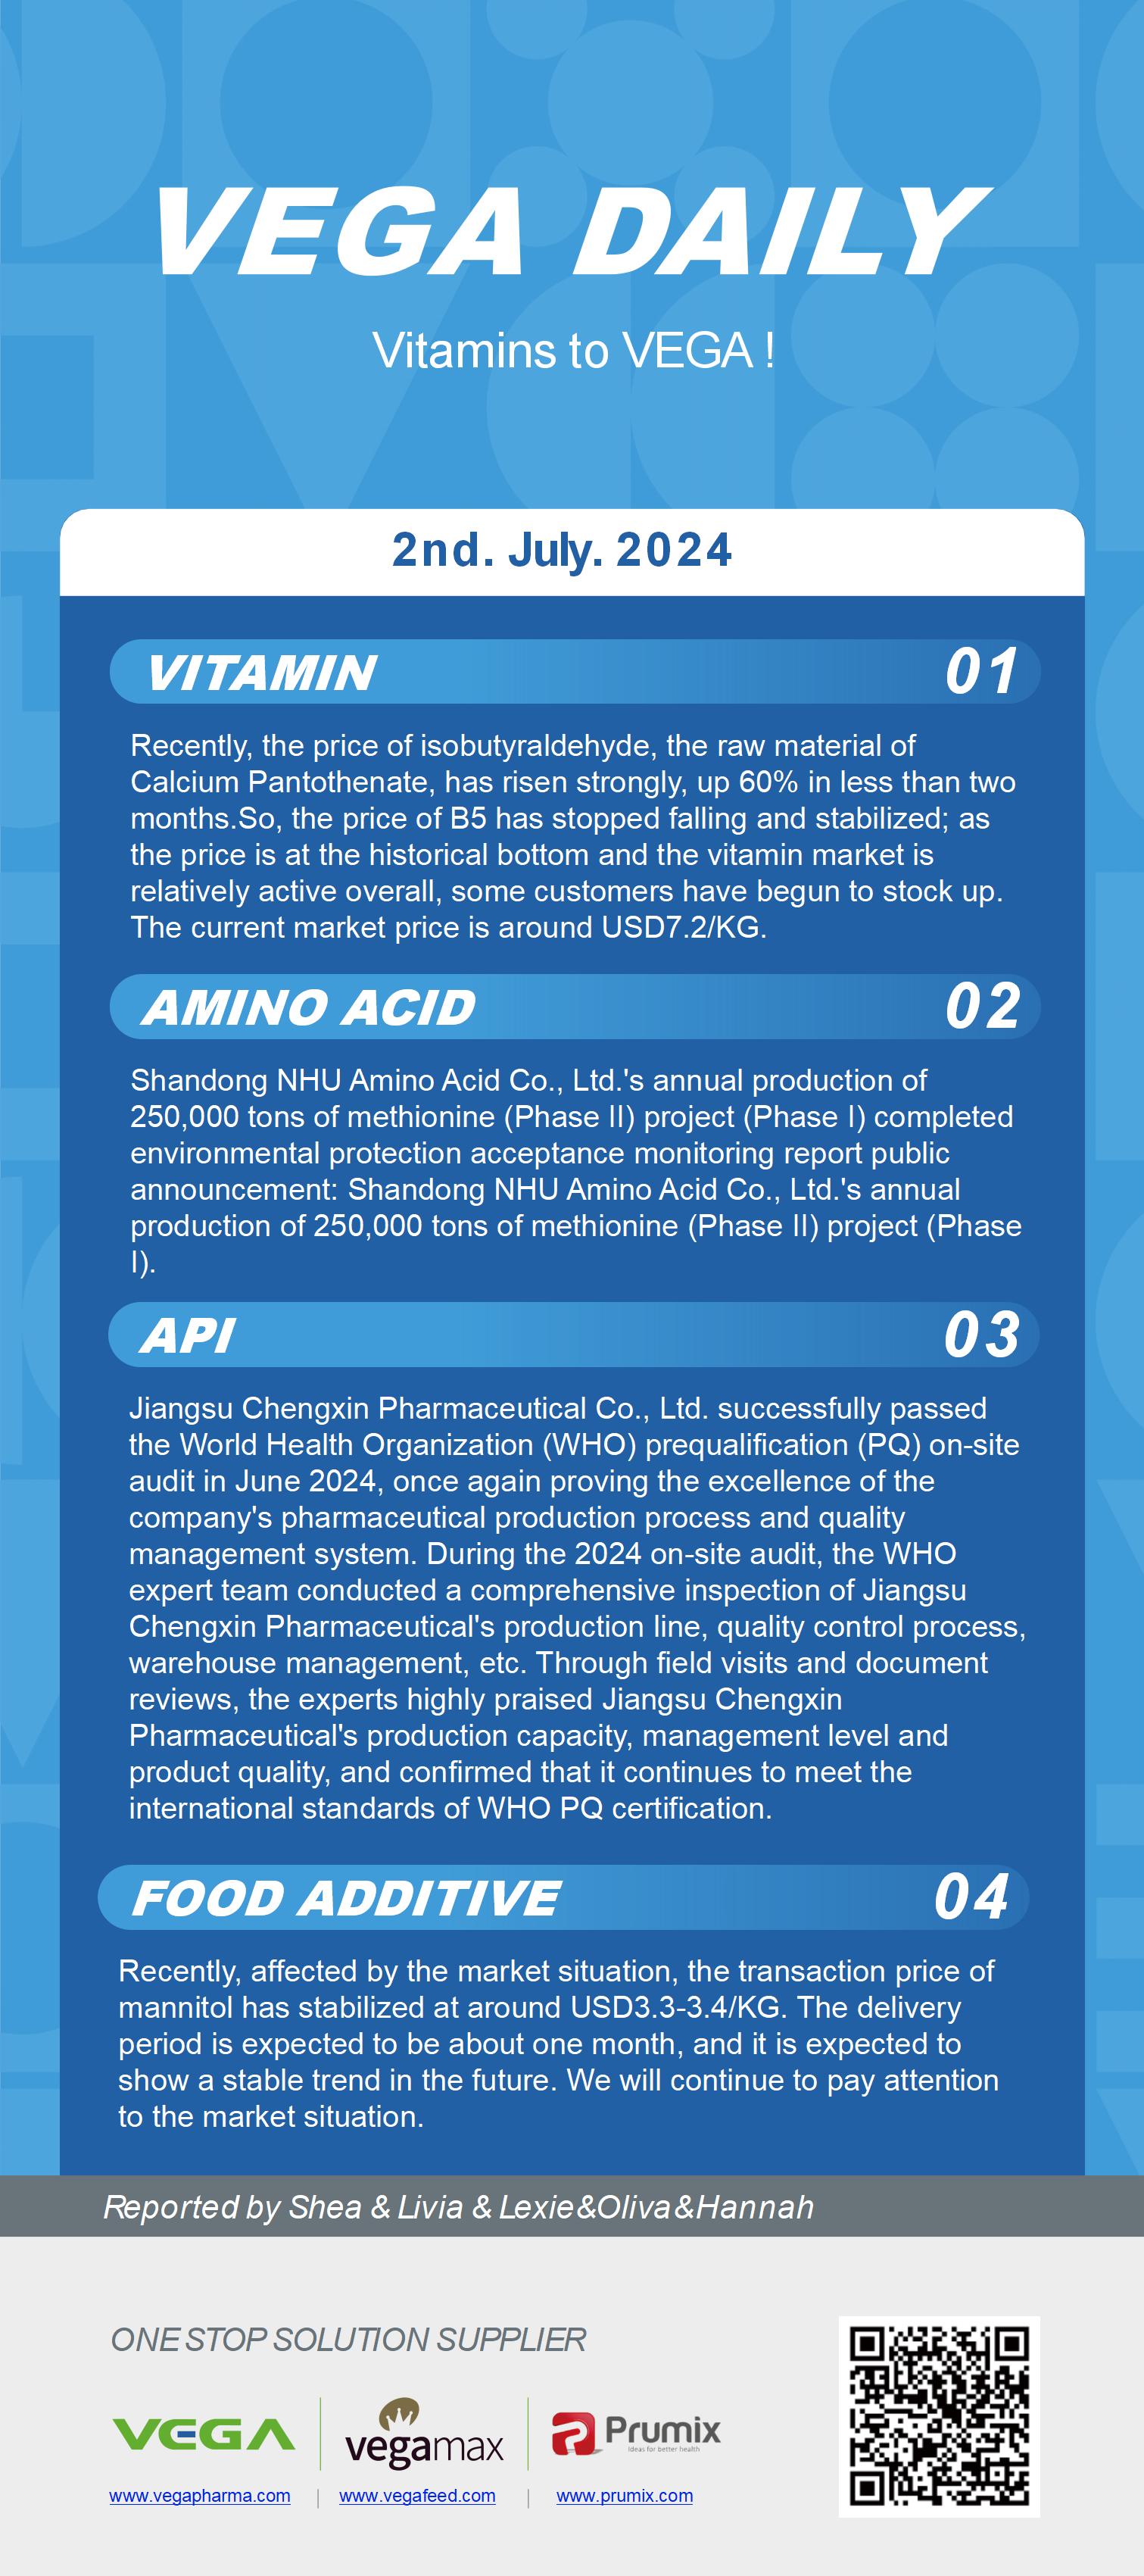 Vega Daily Dated on Jul 2nd 2024 Vitamin Amino Acid APl Food Additives.jpg